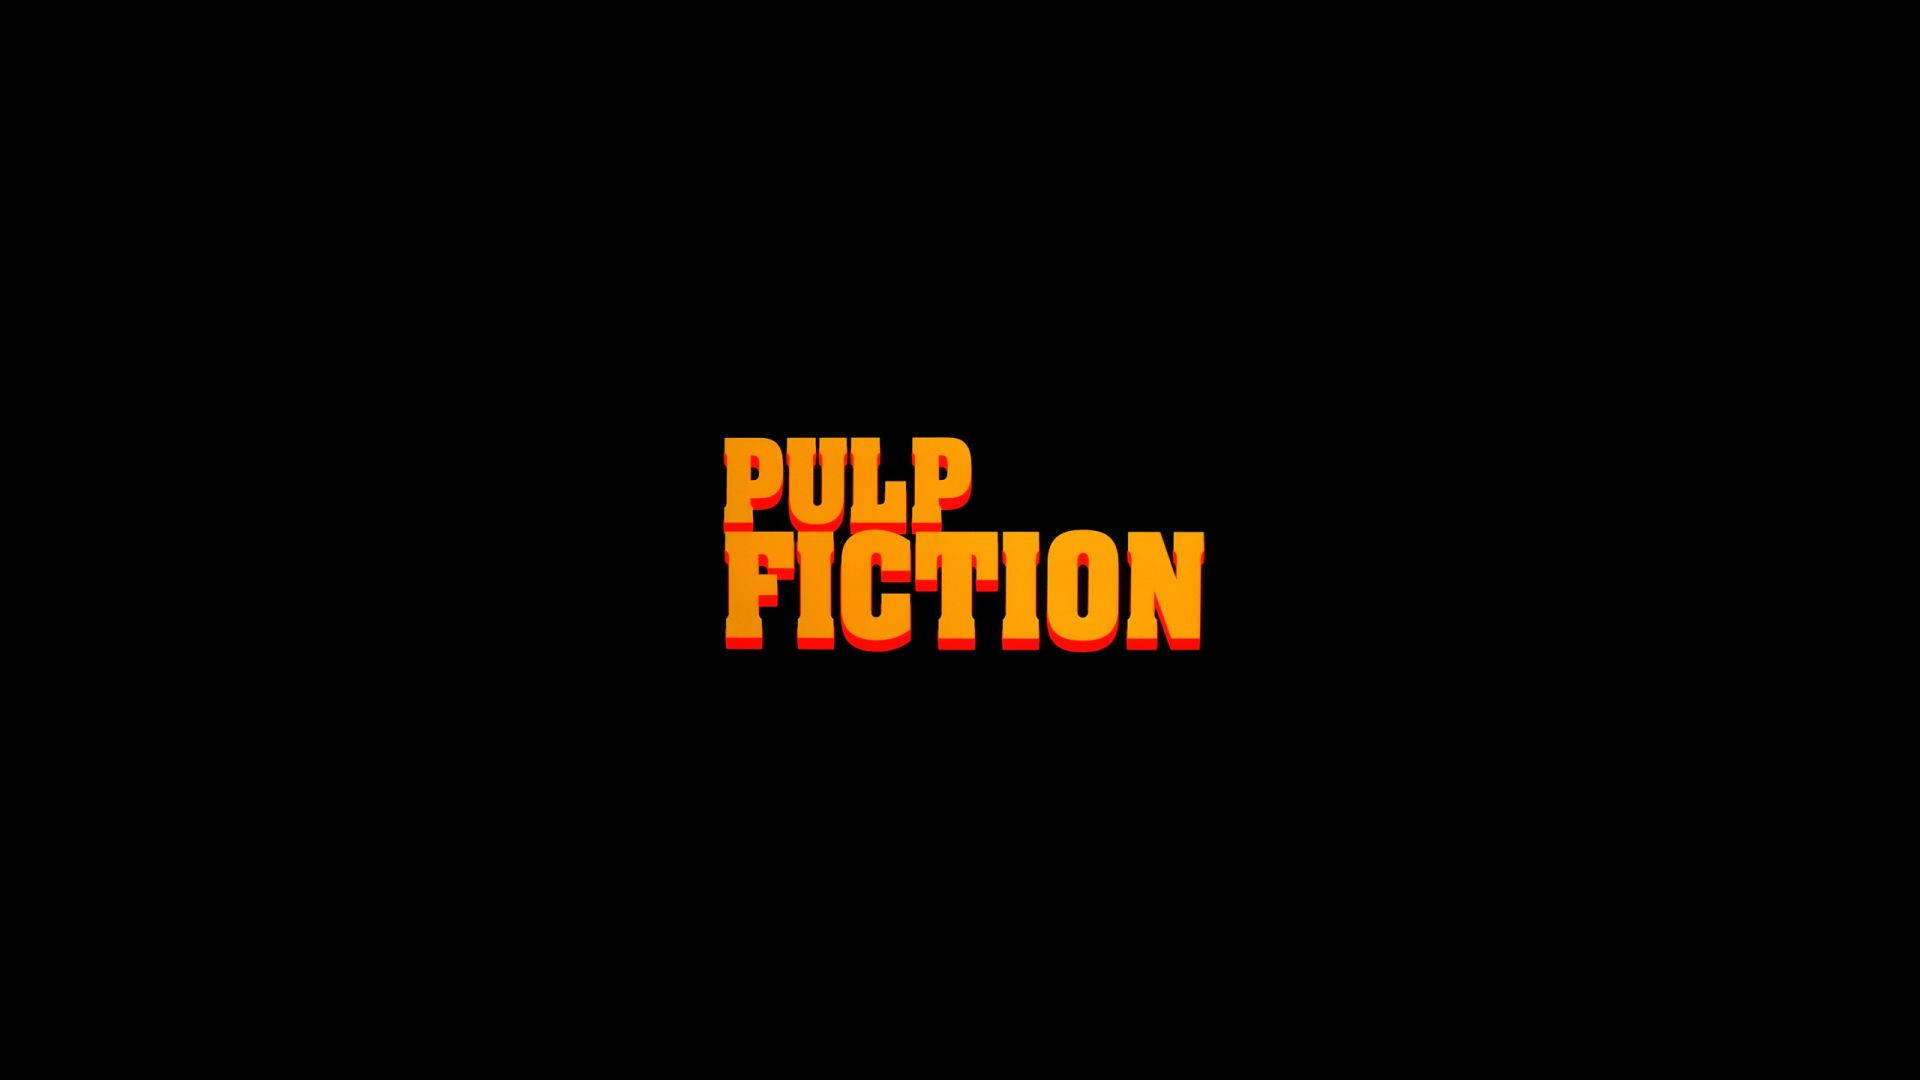 Pulp Fiction Background Wallpaper